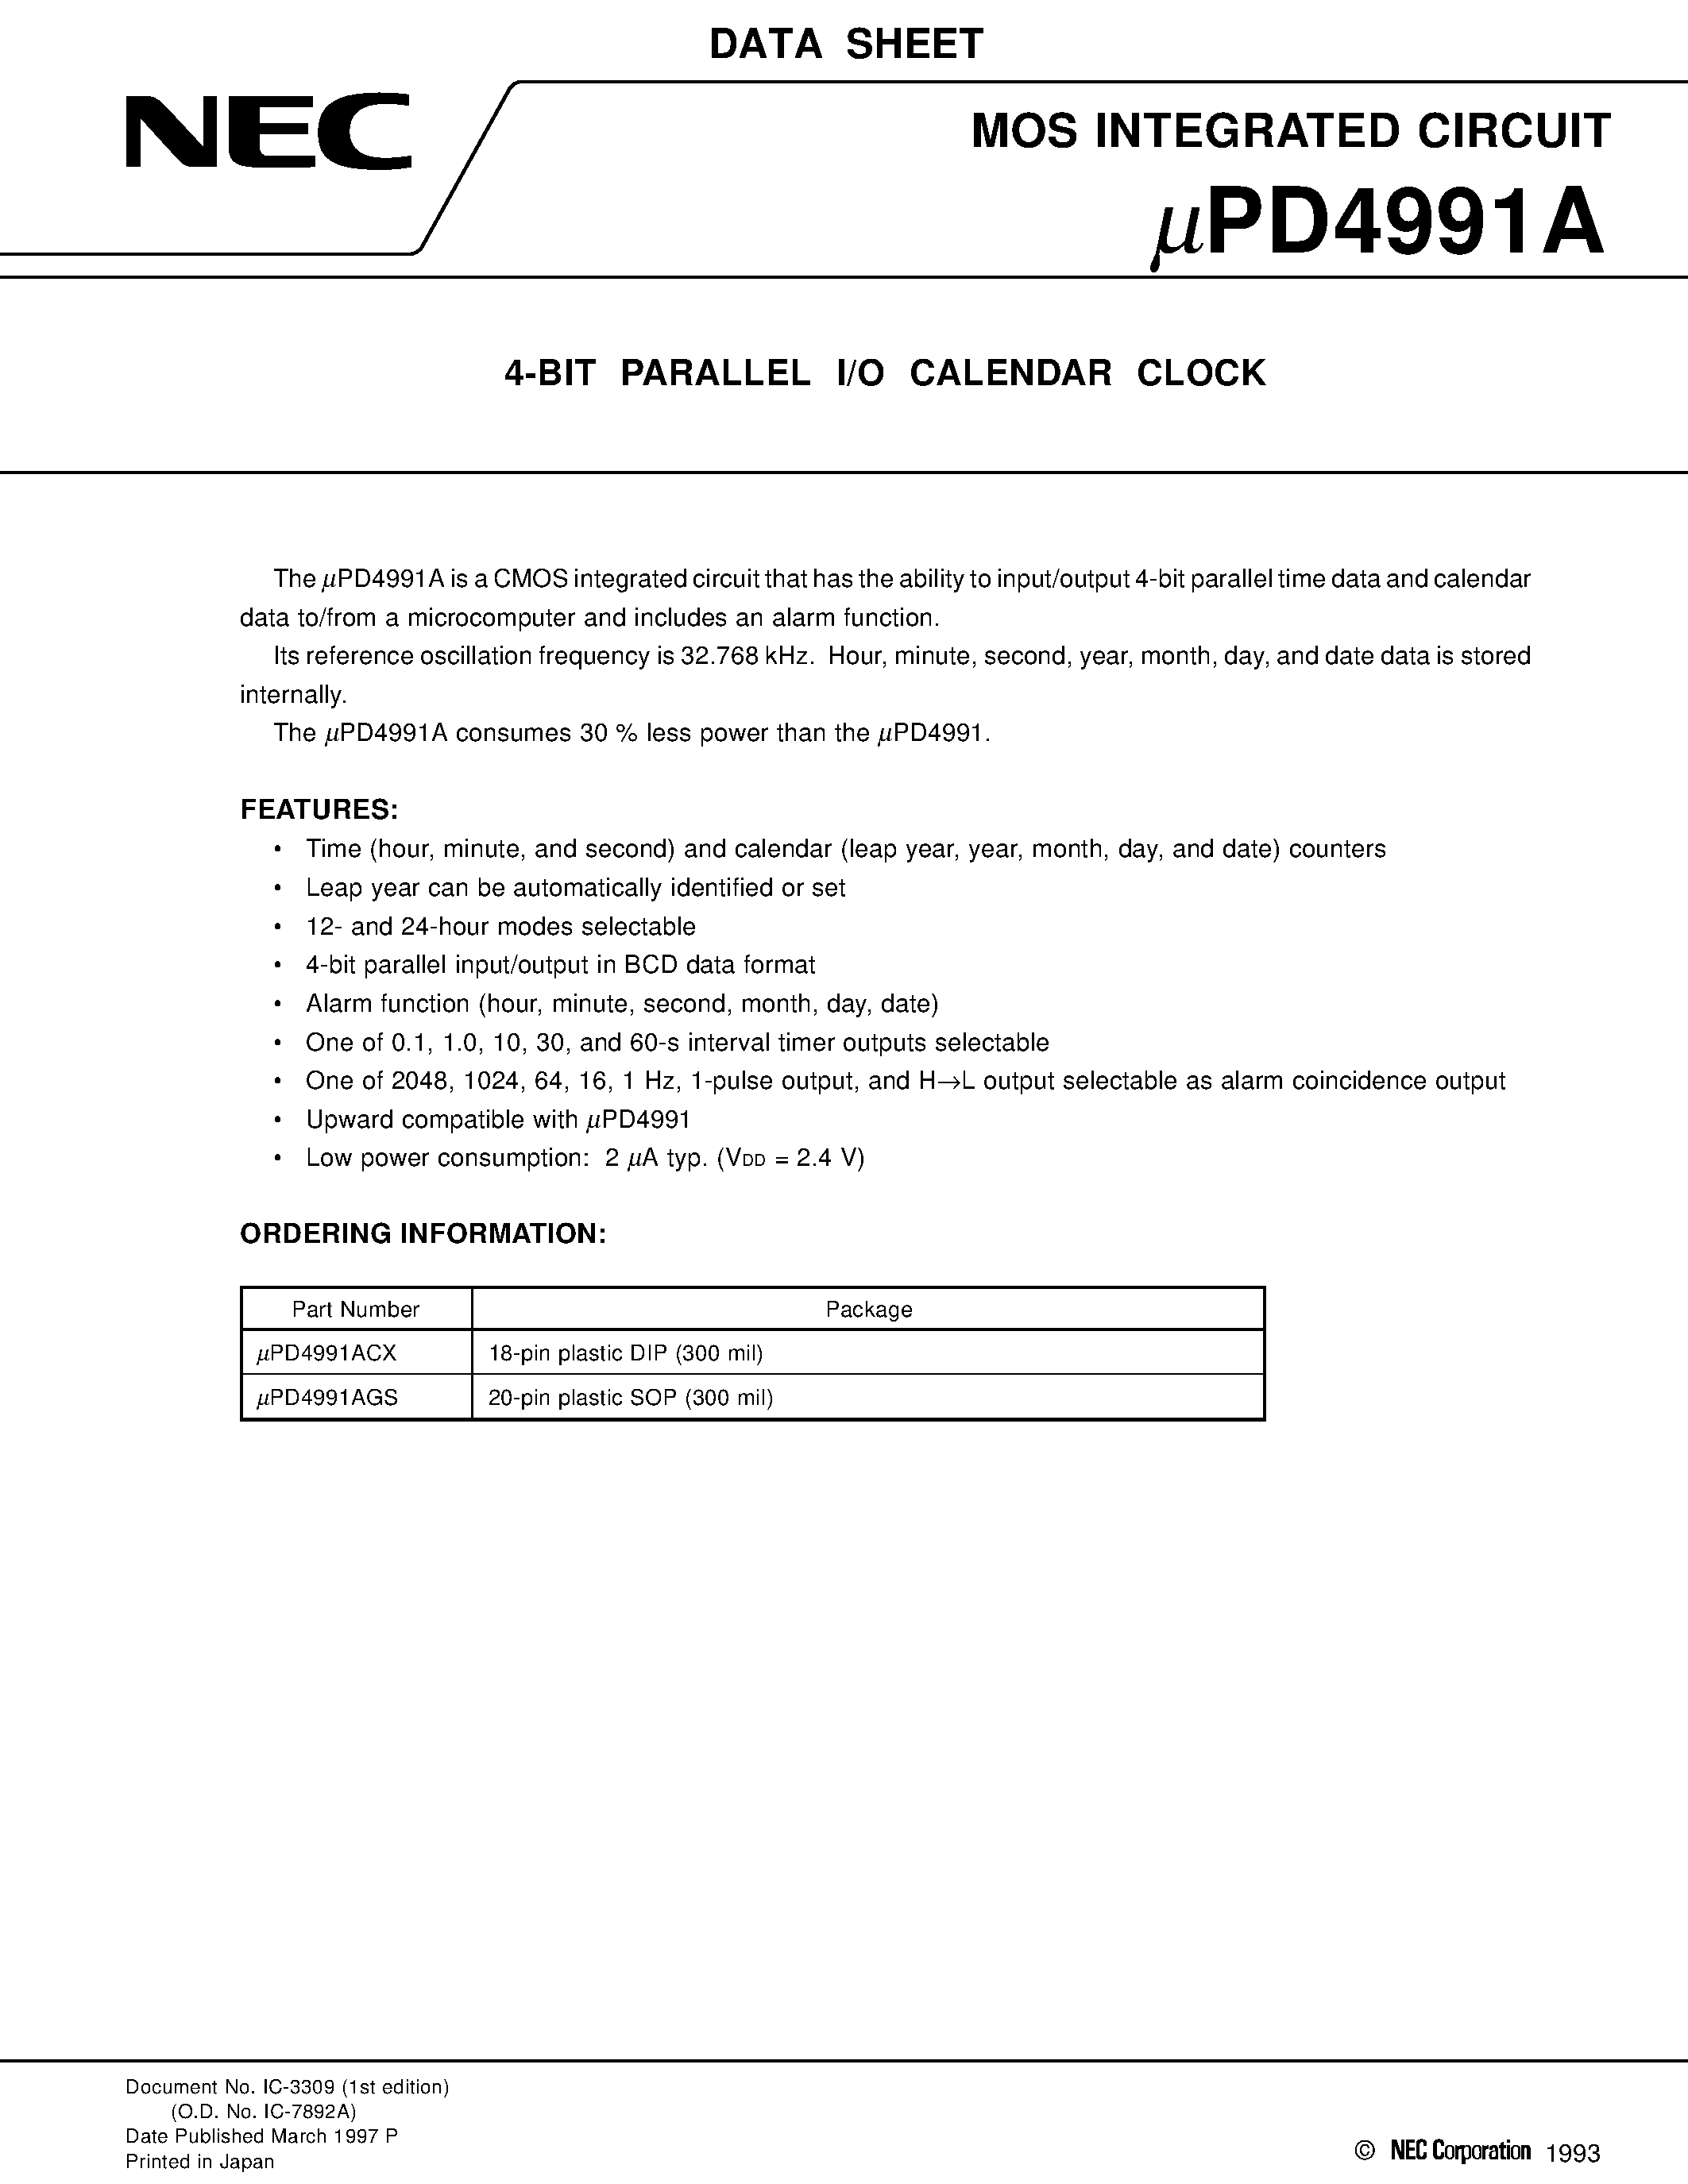 Datasheet UPD4991A - 4-BIT PARALLEL I/O CALENDAR CLOCK page 1